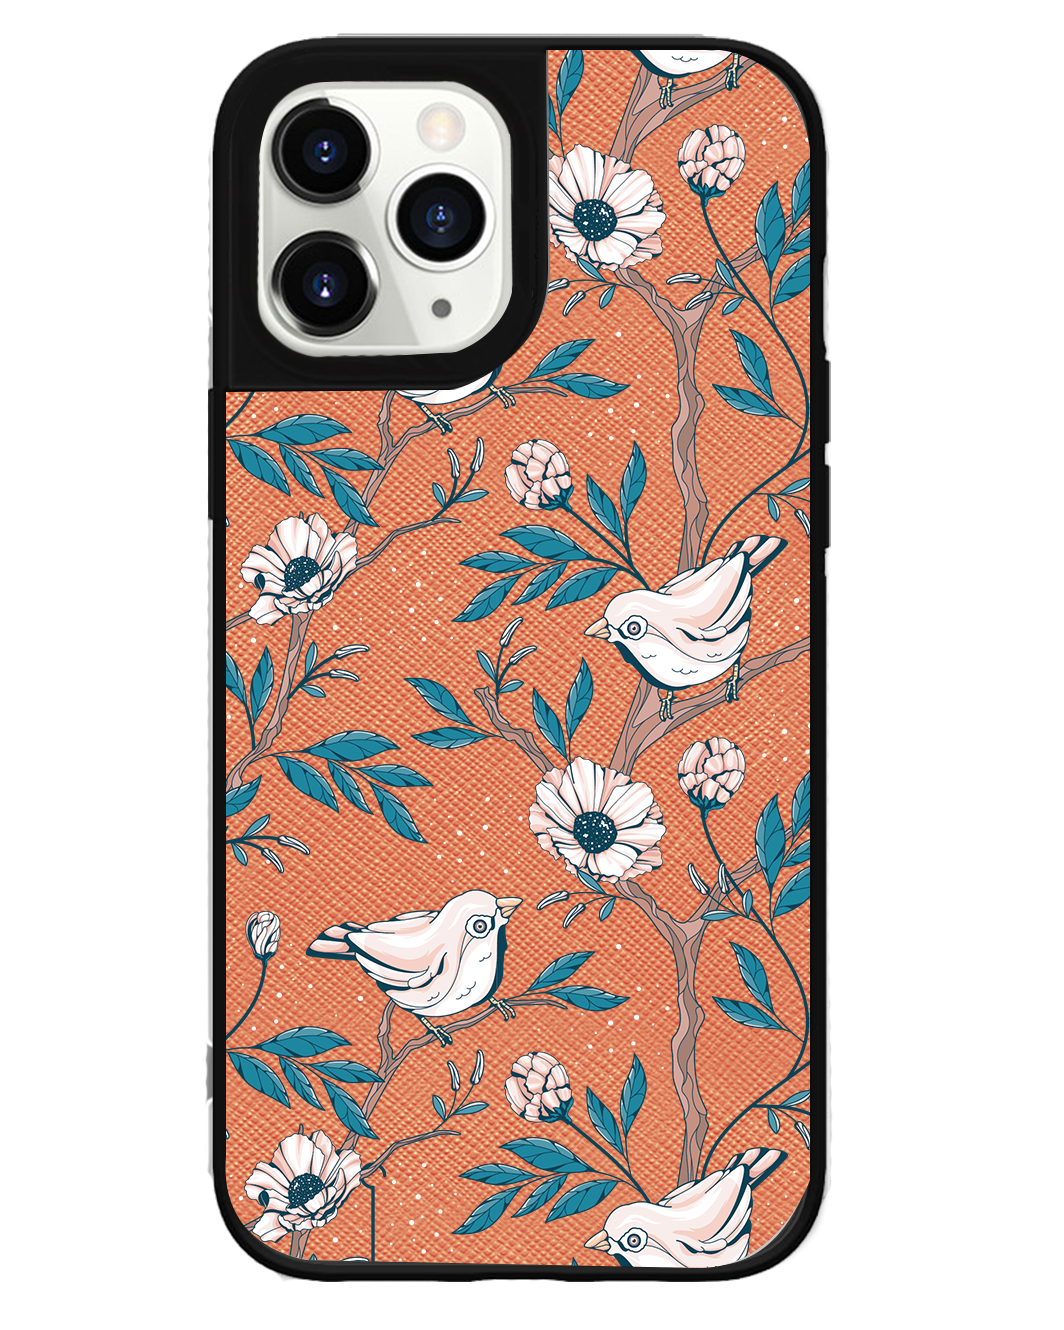 iPhone Leather Grip Case - Lovebird 3.0